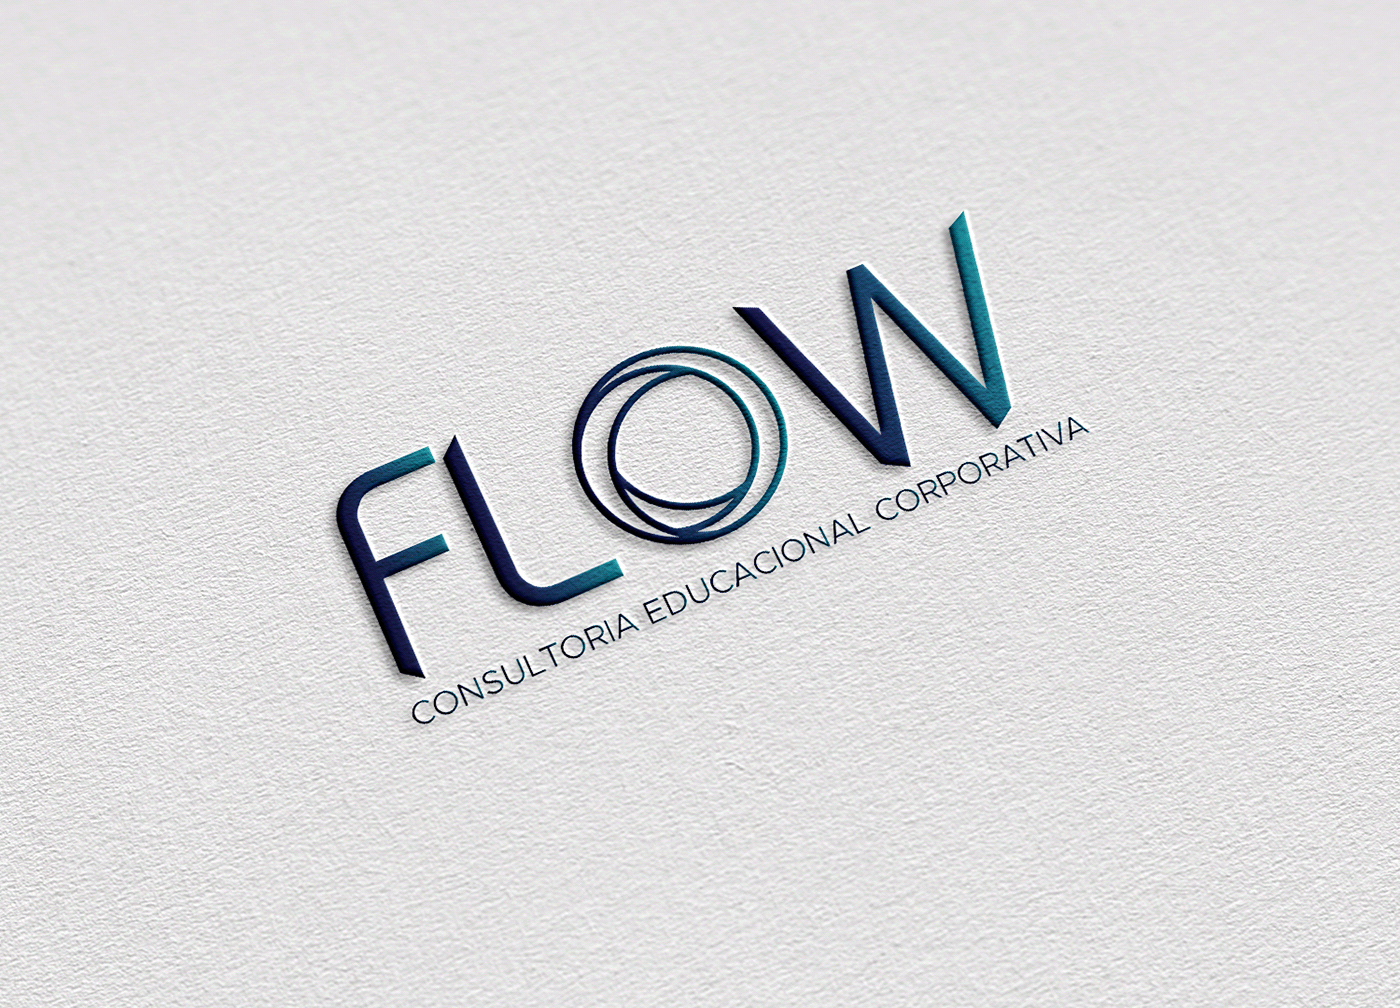 IDENTIDA VISUAL FLOW - Criada para uma empresa de consultoria educacional corporativa